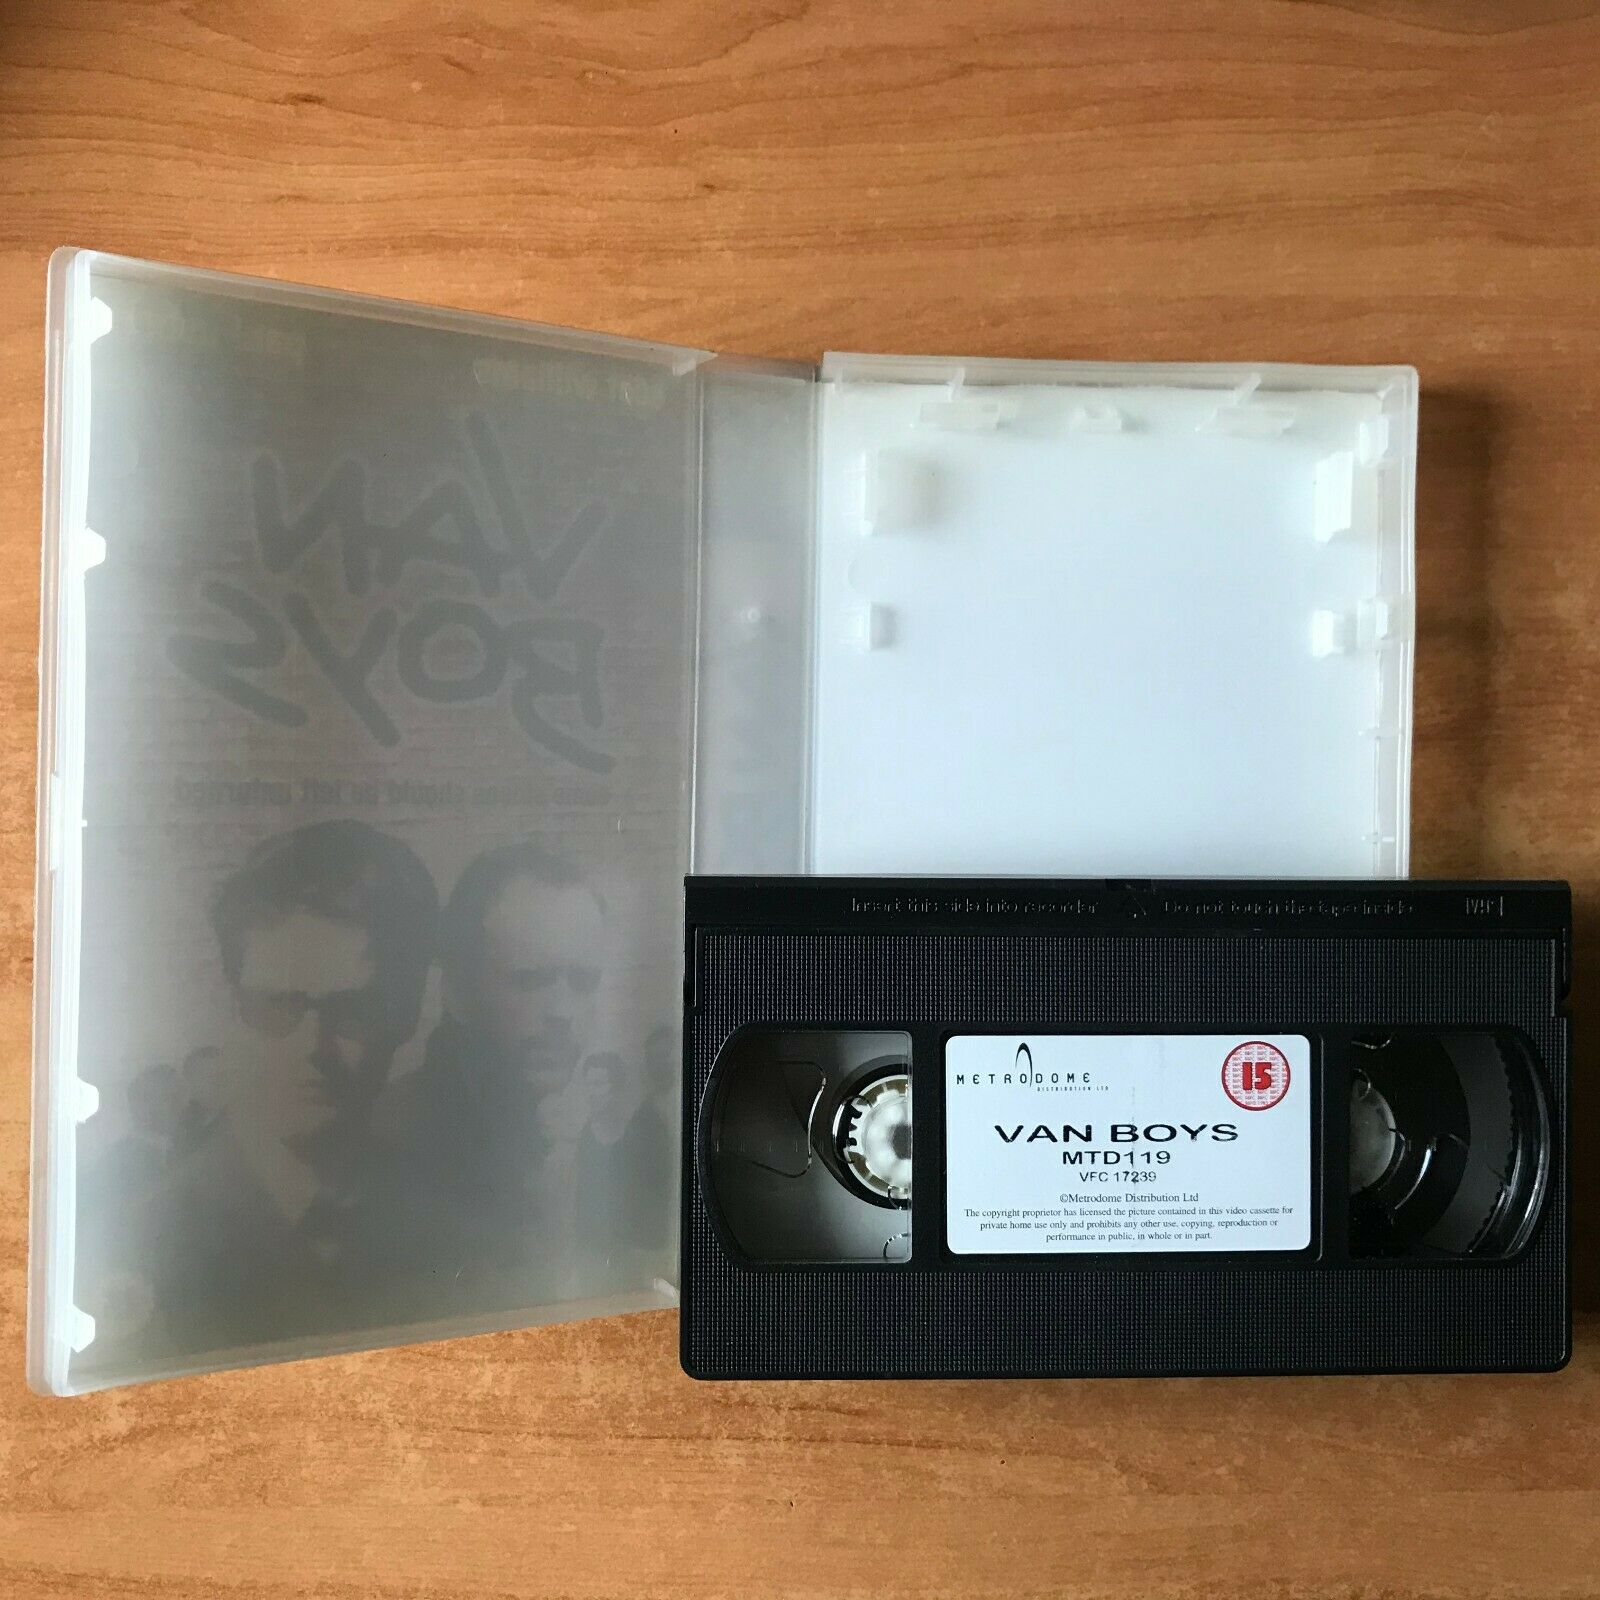 The Van Boys (2000) - Crime Drama ]Large Box] Scot Williams / Paul Usher - VHS-